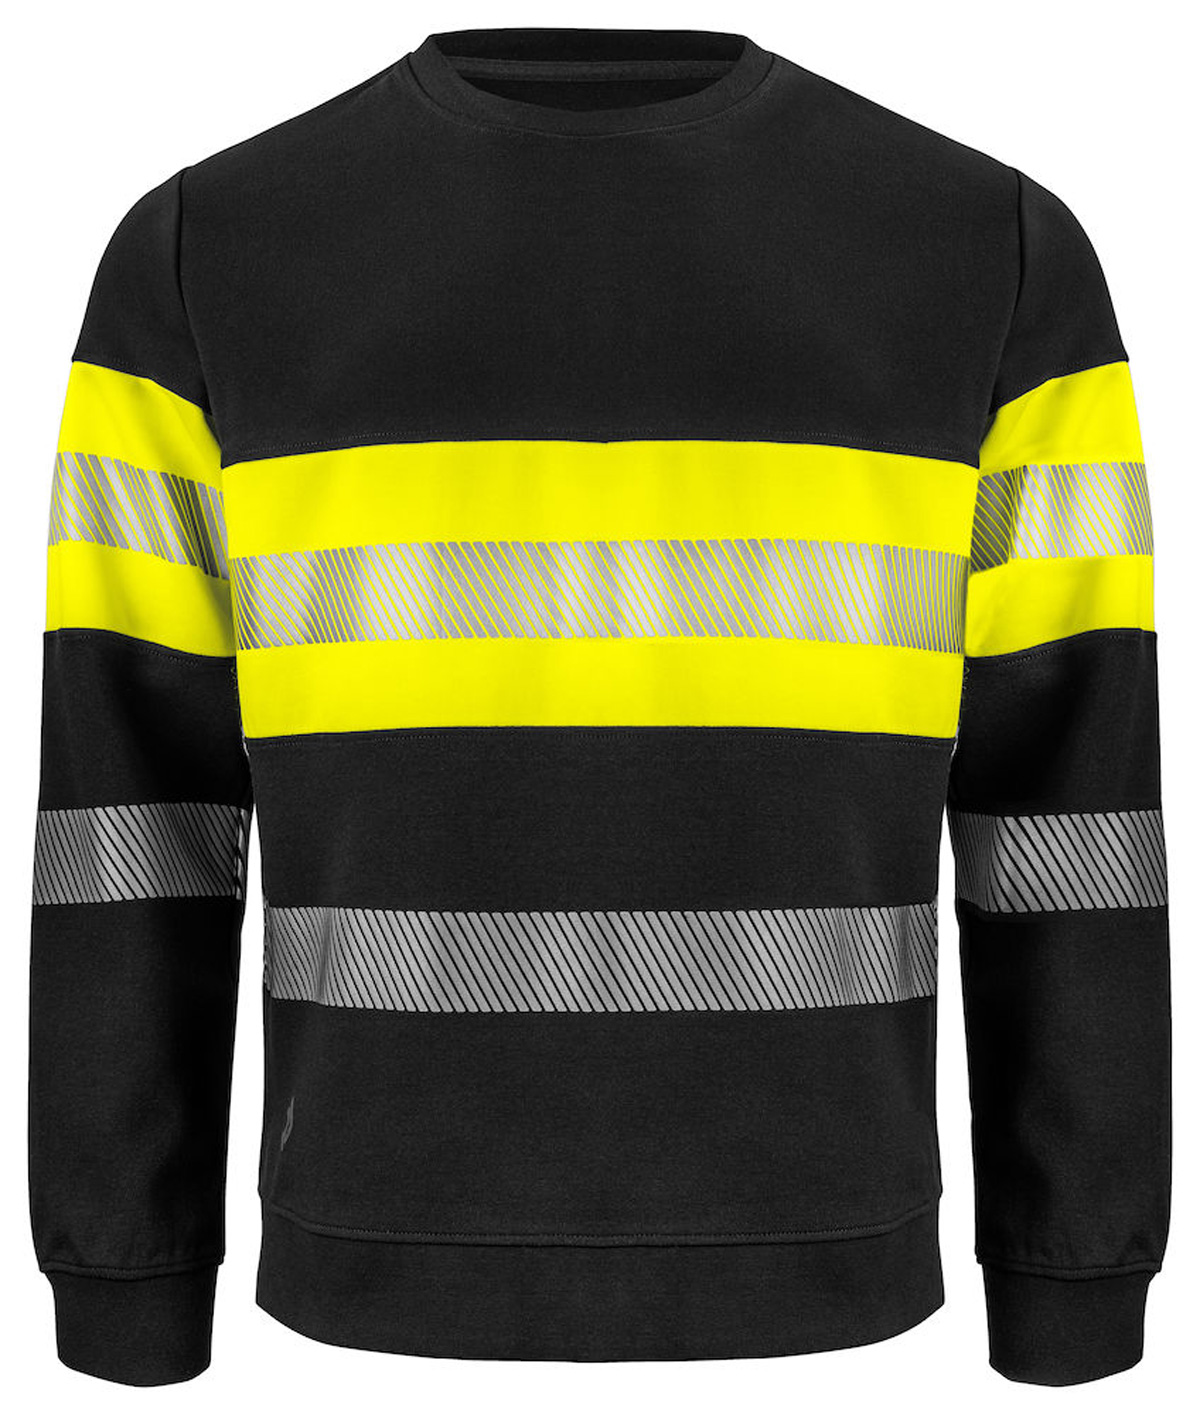 Sweatshirt EN ISO 20471 CLASS 1 ProJob 6129